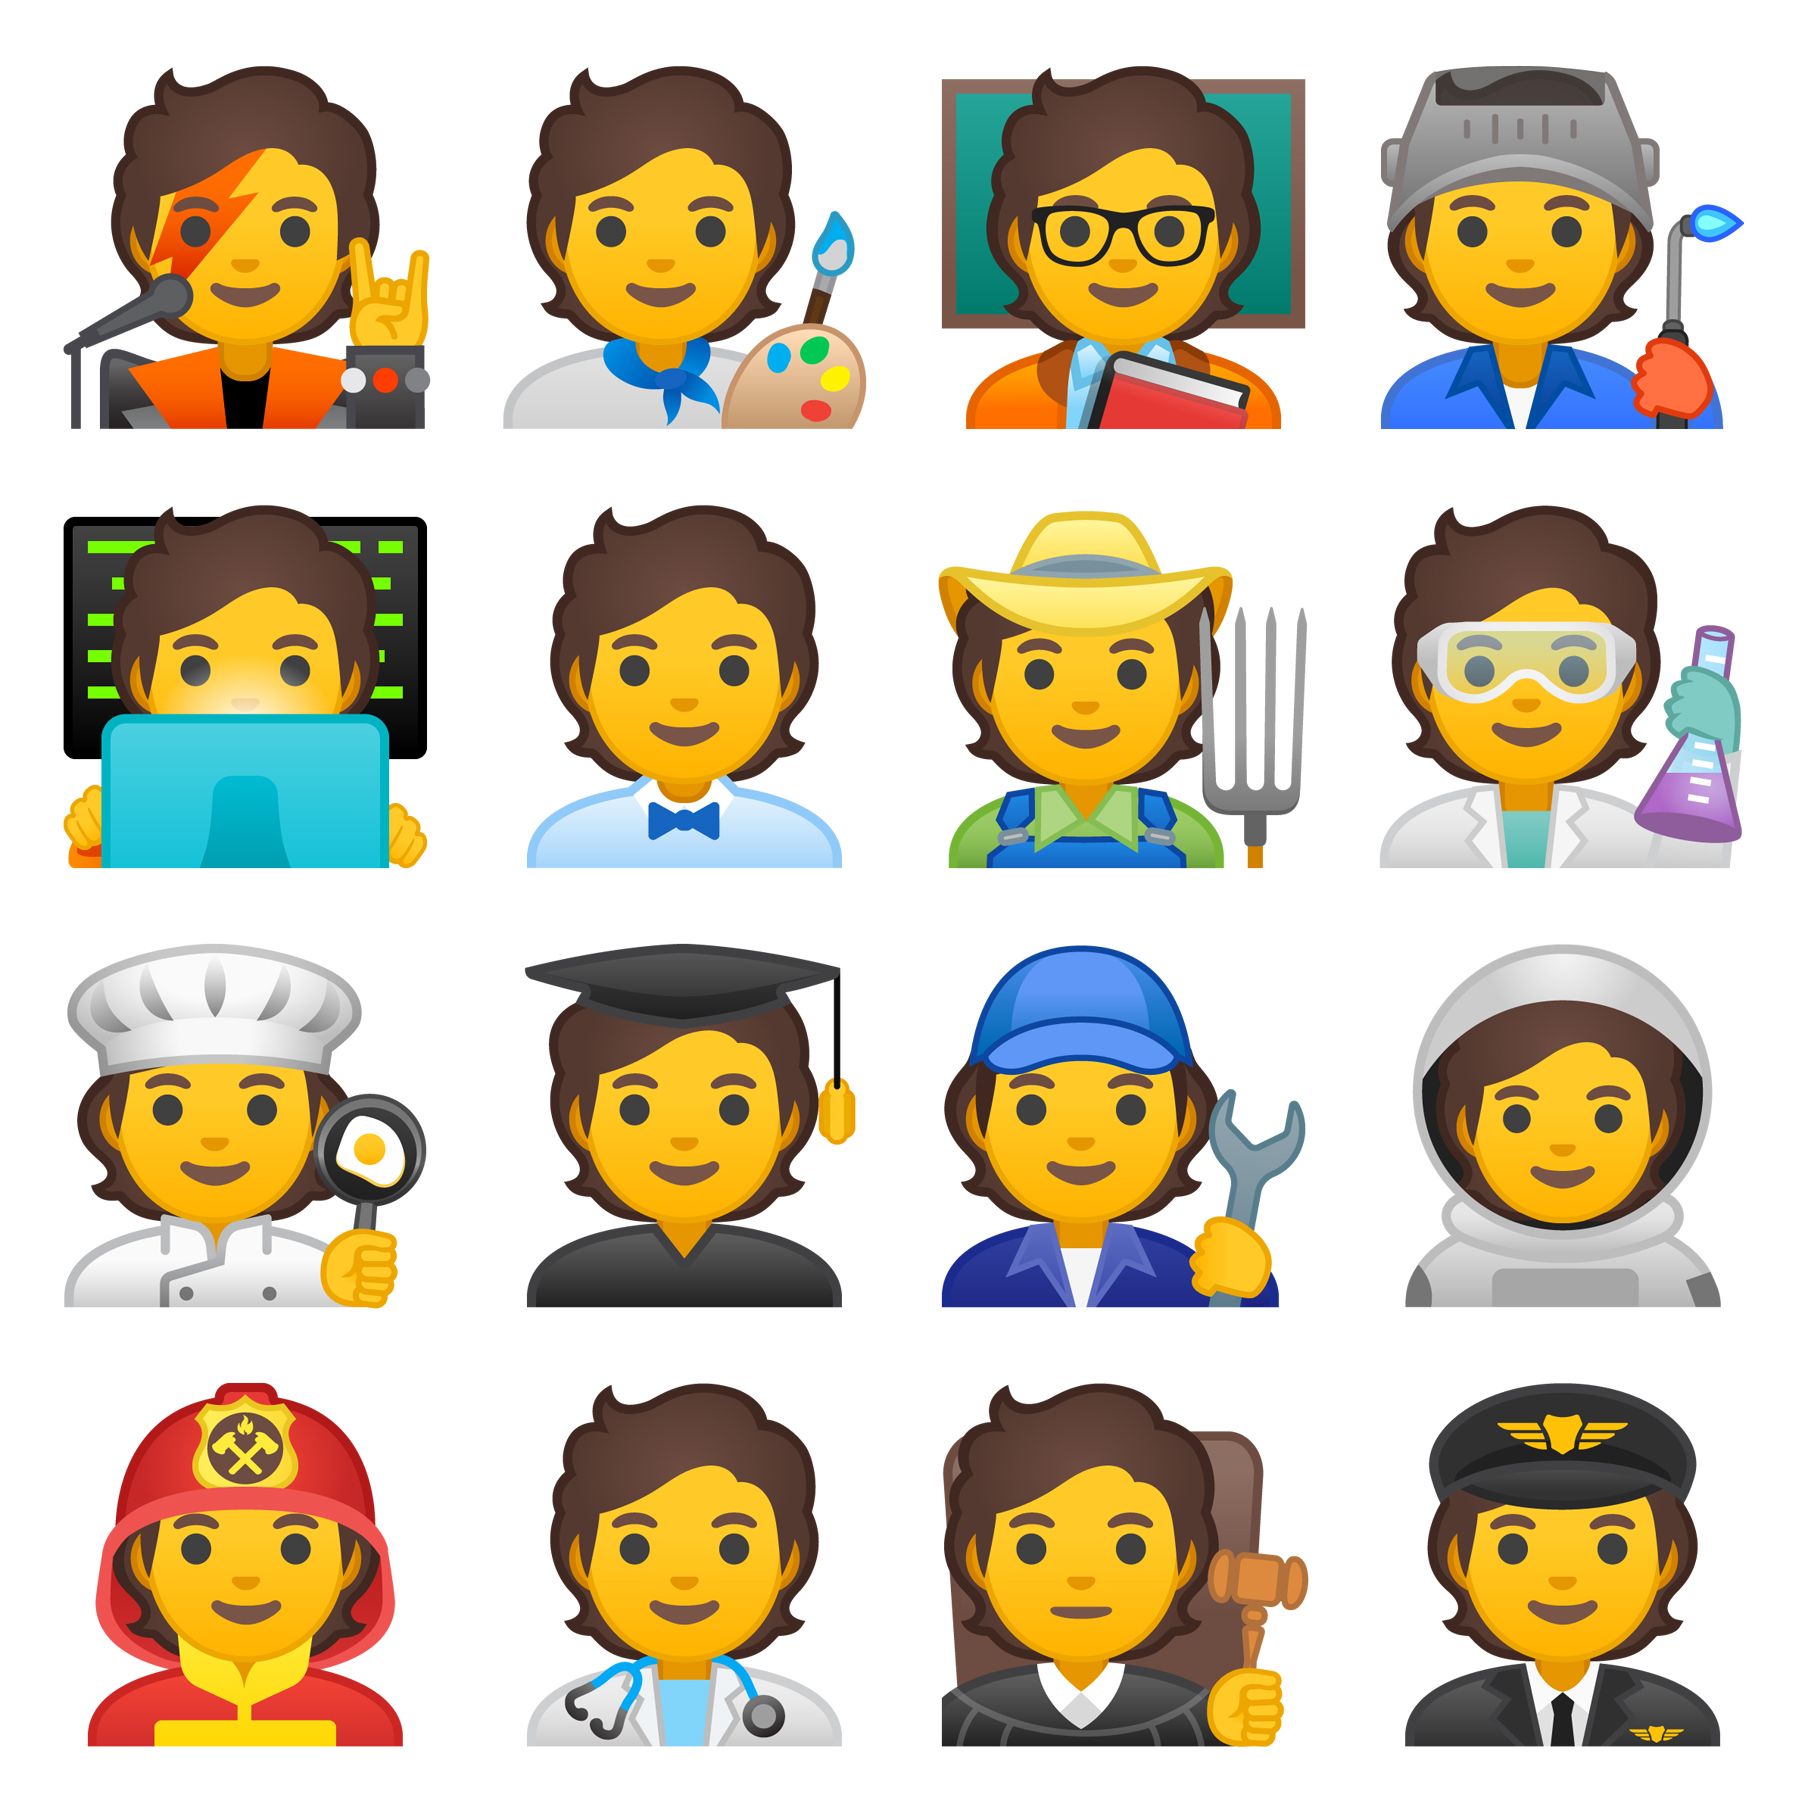 Emojipedia-Android-10.1-New-Gender-Neutral-Profession-Emojis